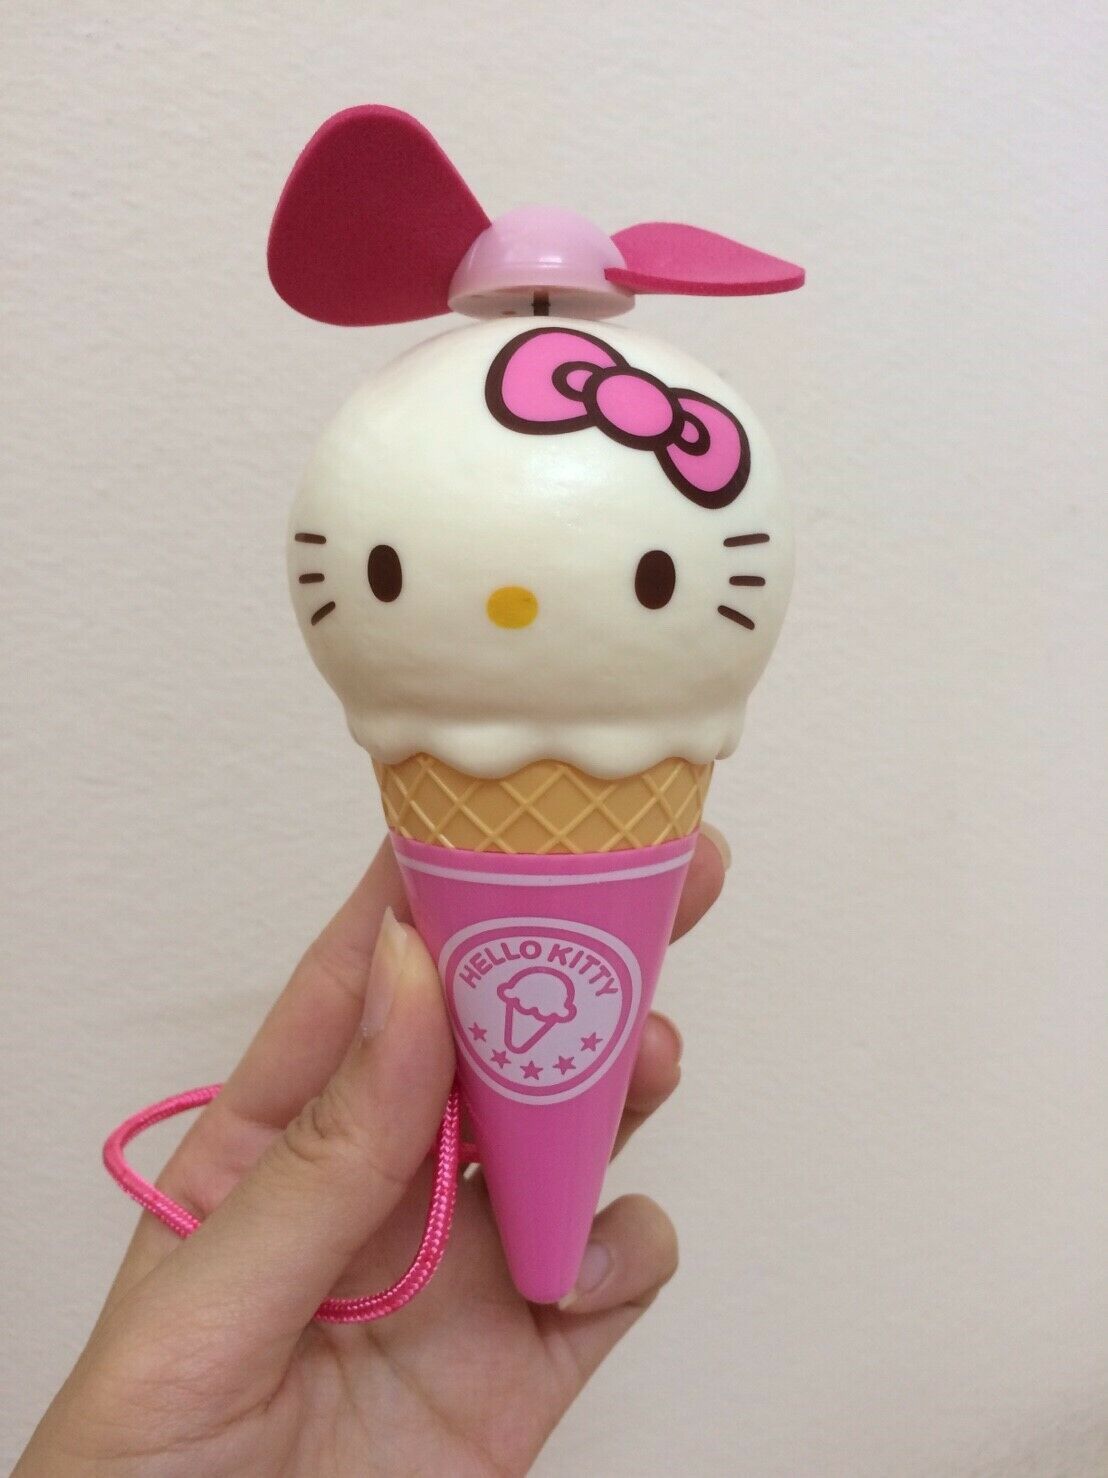 Sanrio Hello Kitty Ice Cream Cone Fan and 35 similar items